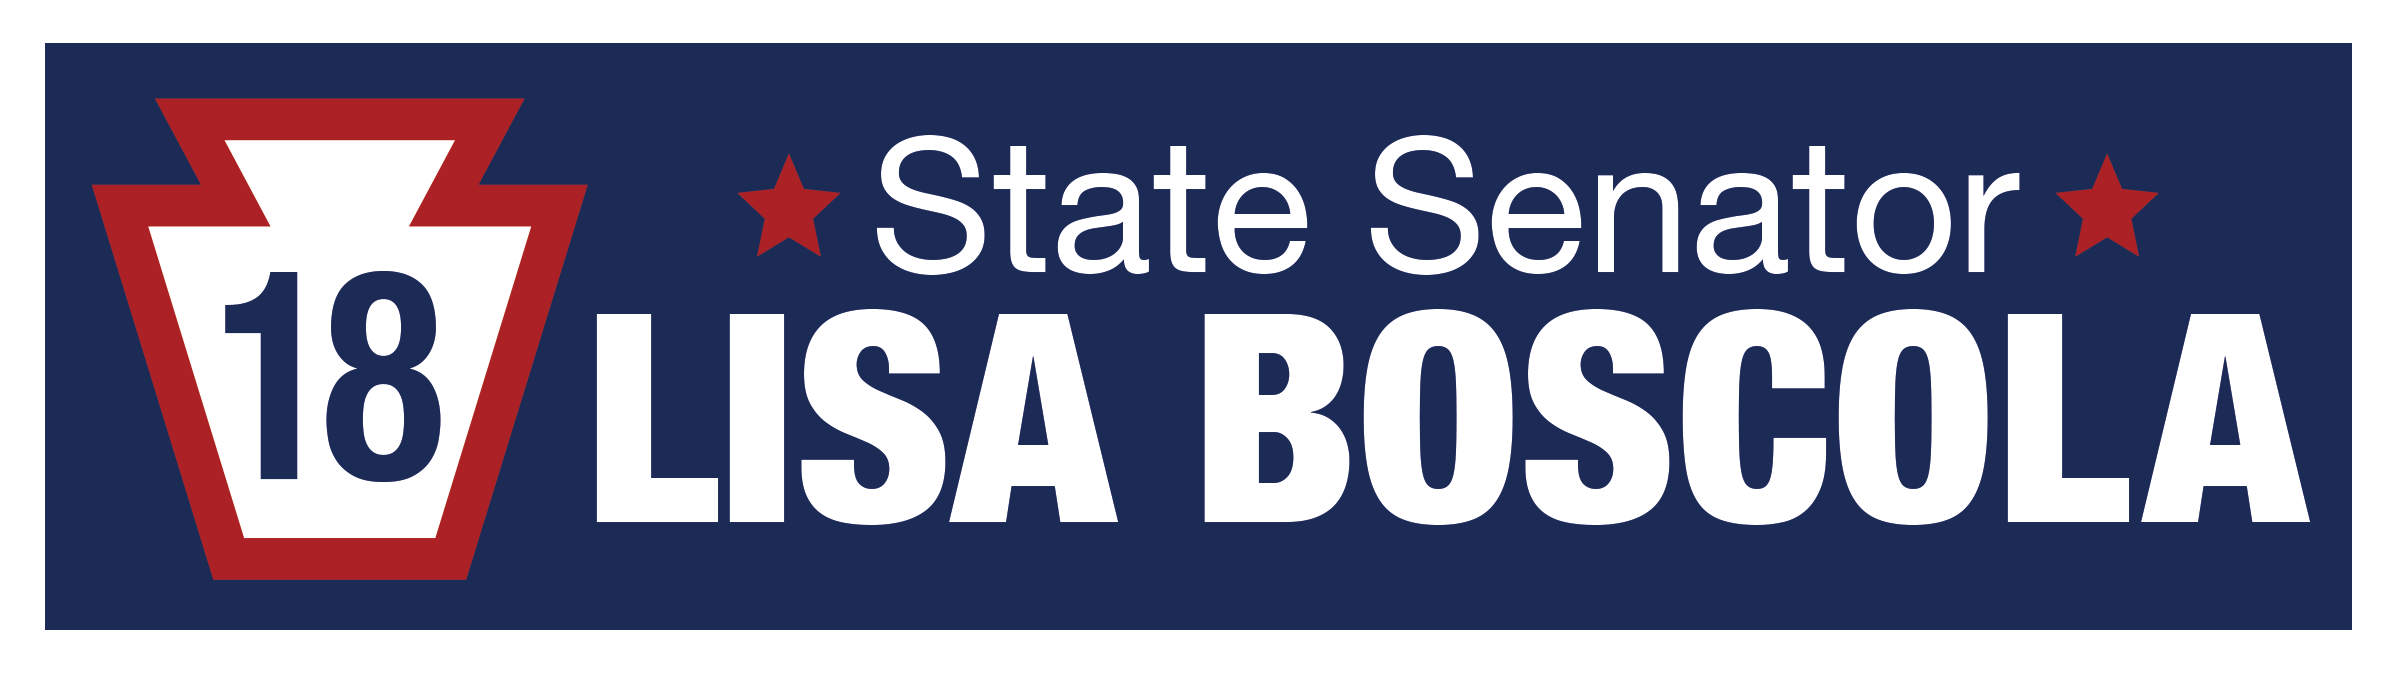 State Senator Lisa Boscola logo